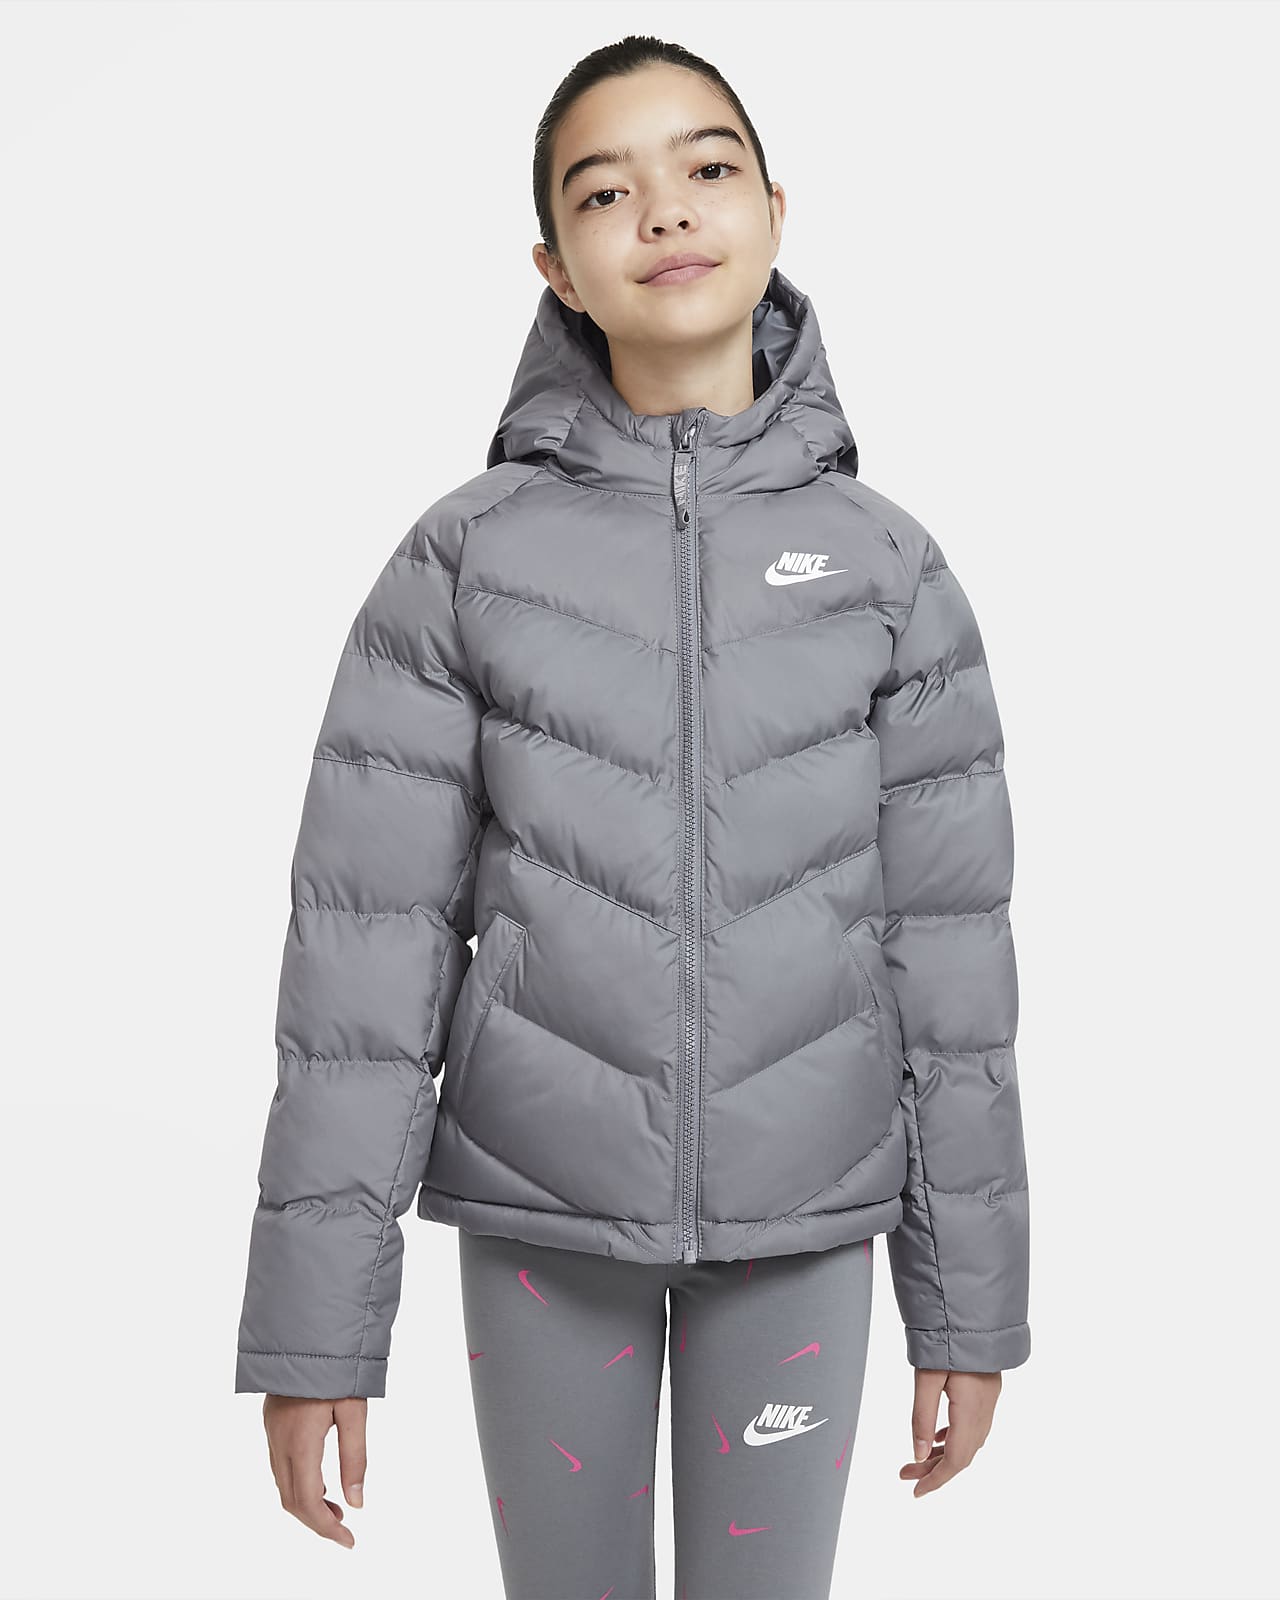 Nike Sportswear Jacke mit Synthetikfüllung für ältere Kinder